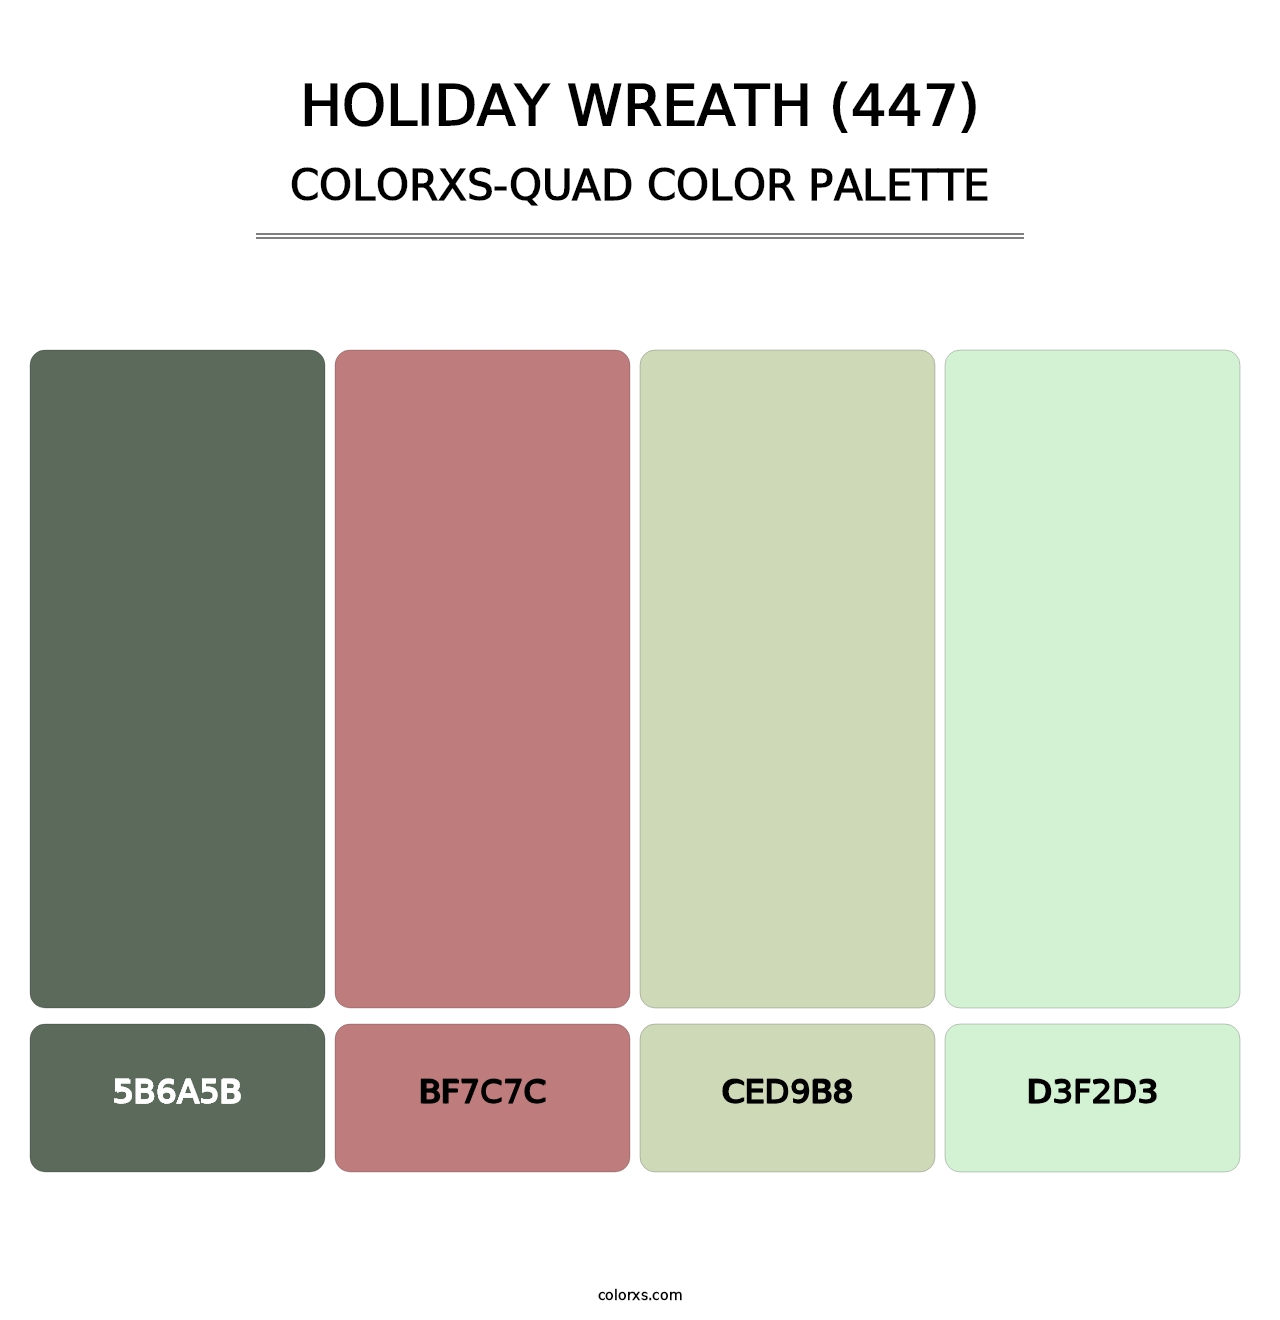 Holiday Wreath (447) - Colorxs Quad Palette